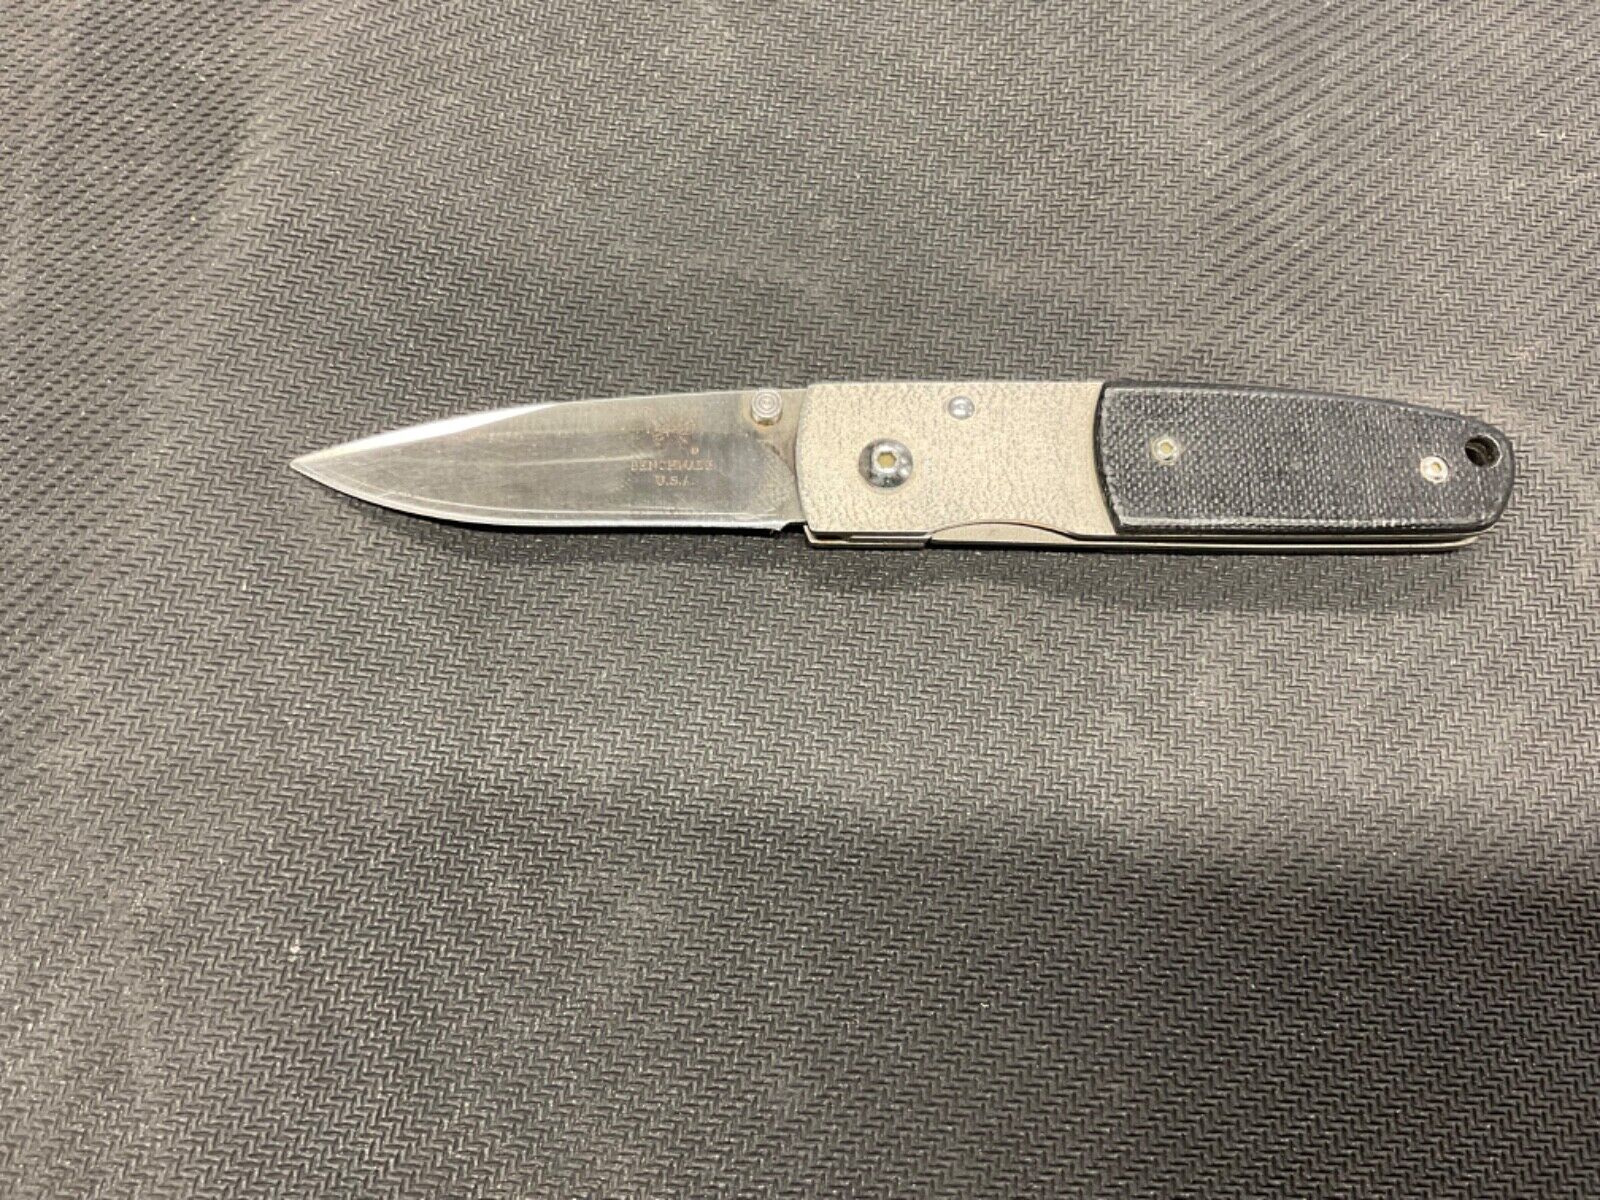 Benchmade 330 Mel Pardue Knife Titanium/G10 ATS-34 Plain Edge Discontinued